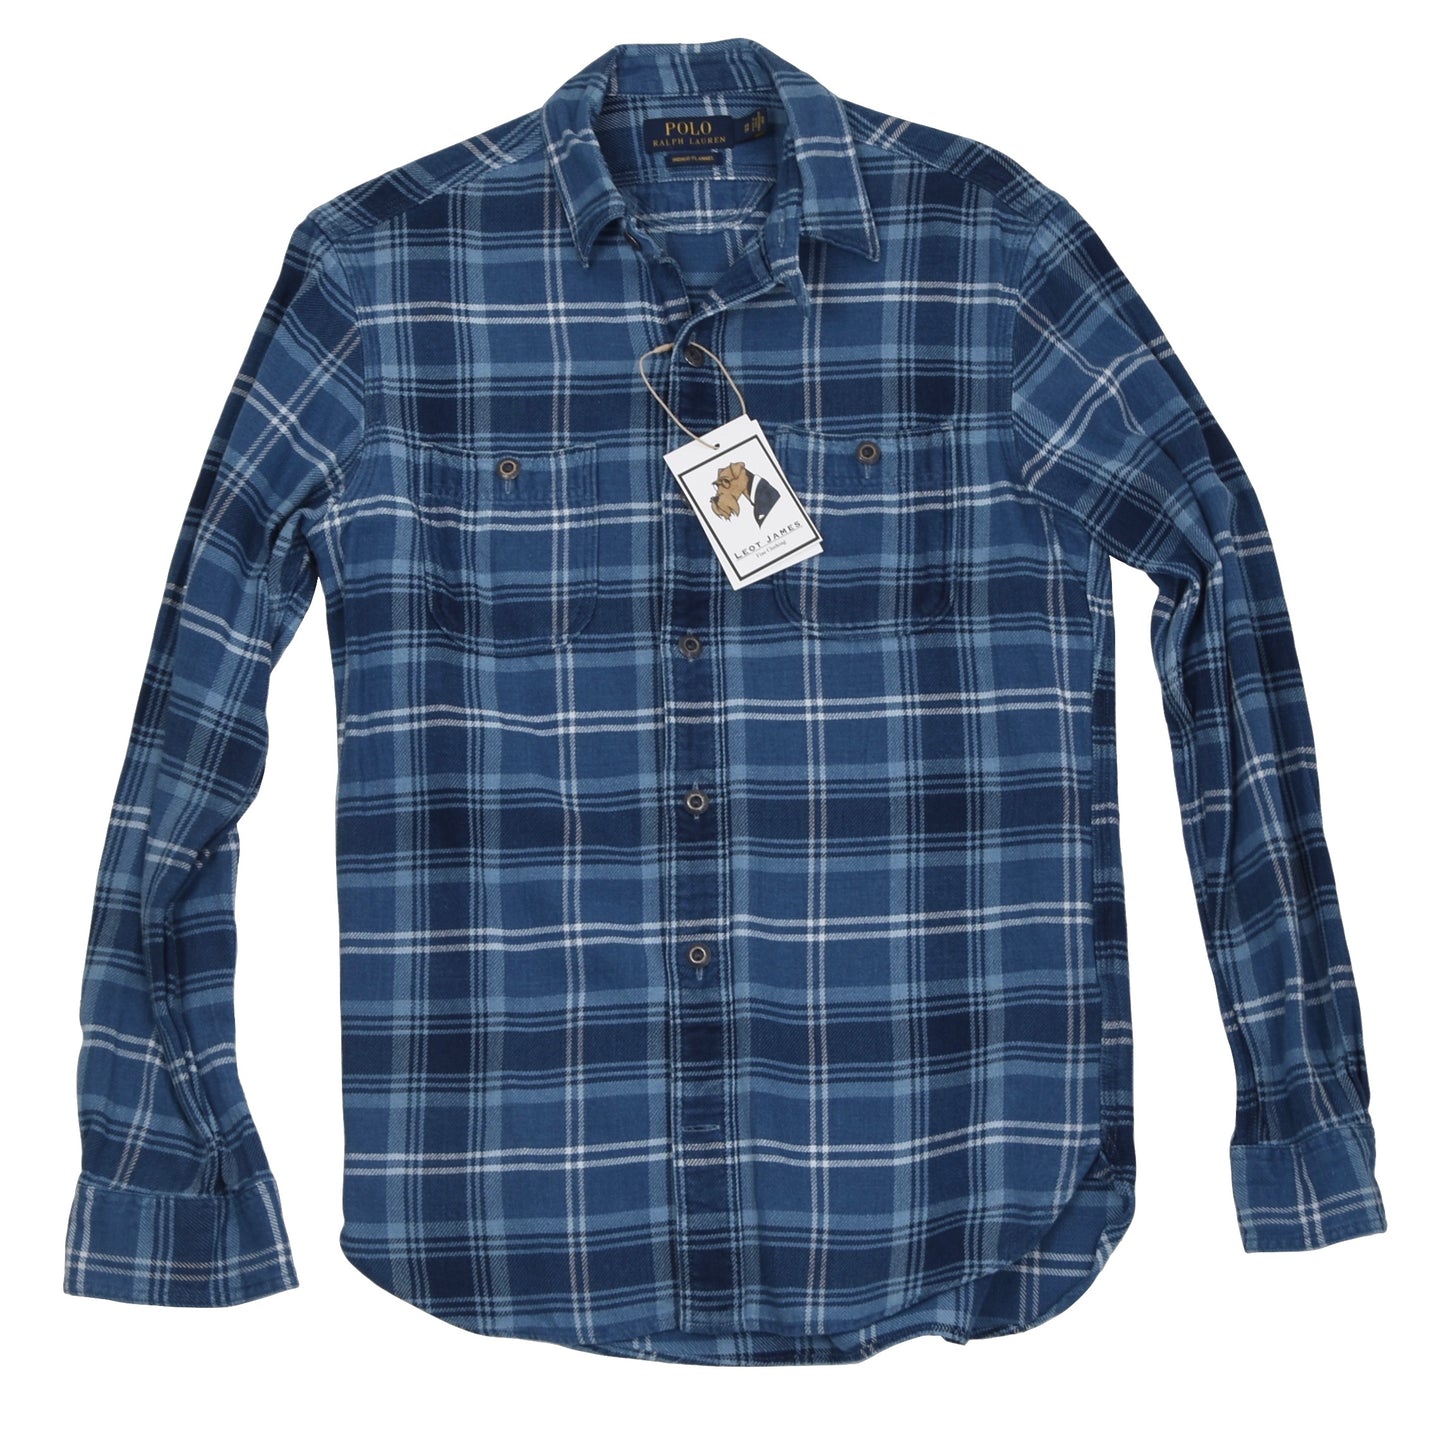 Polo Ralph Lauren Indigo Flannel Shirt Size XS - Blue Plaid